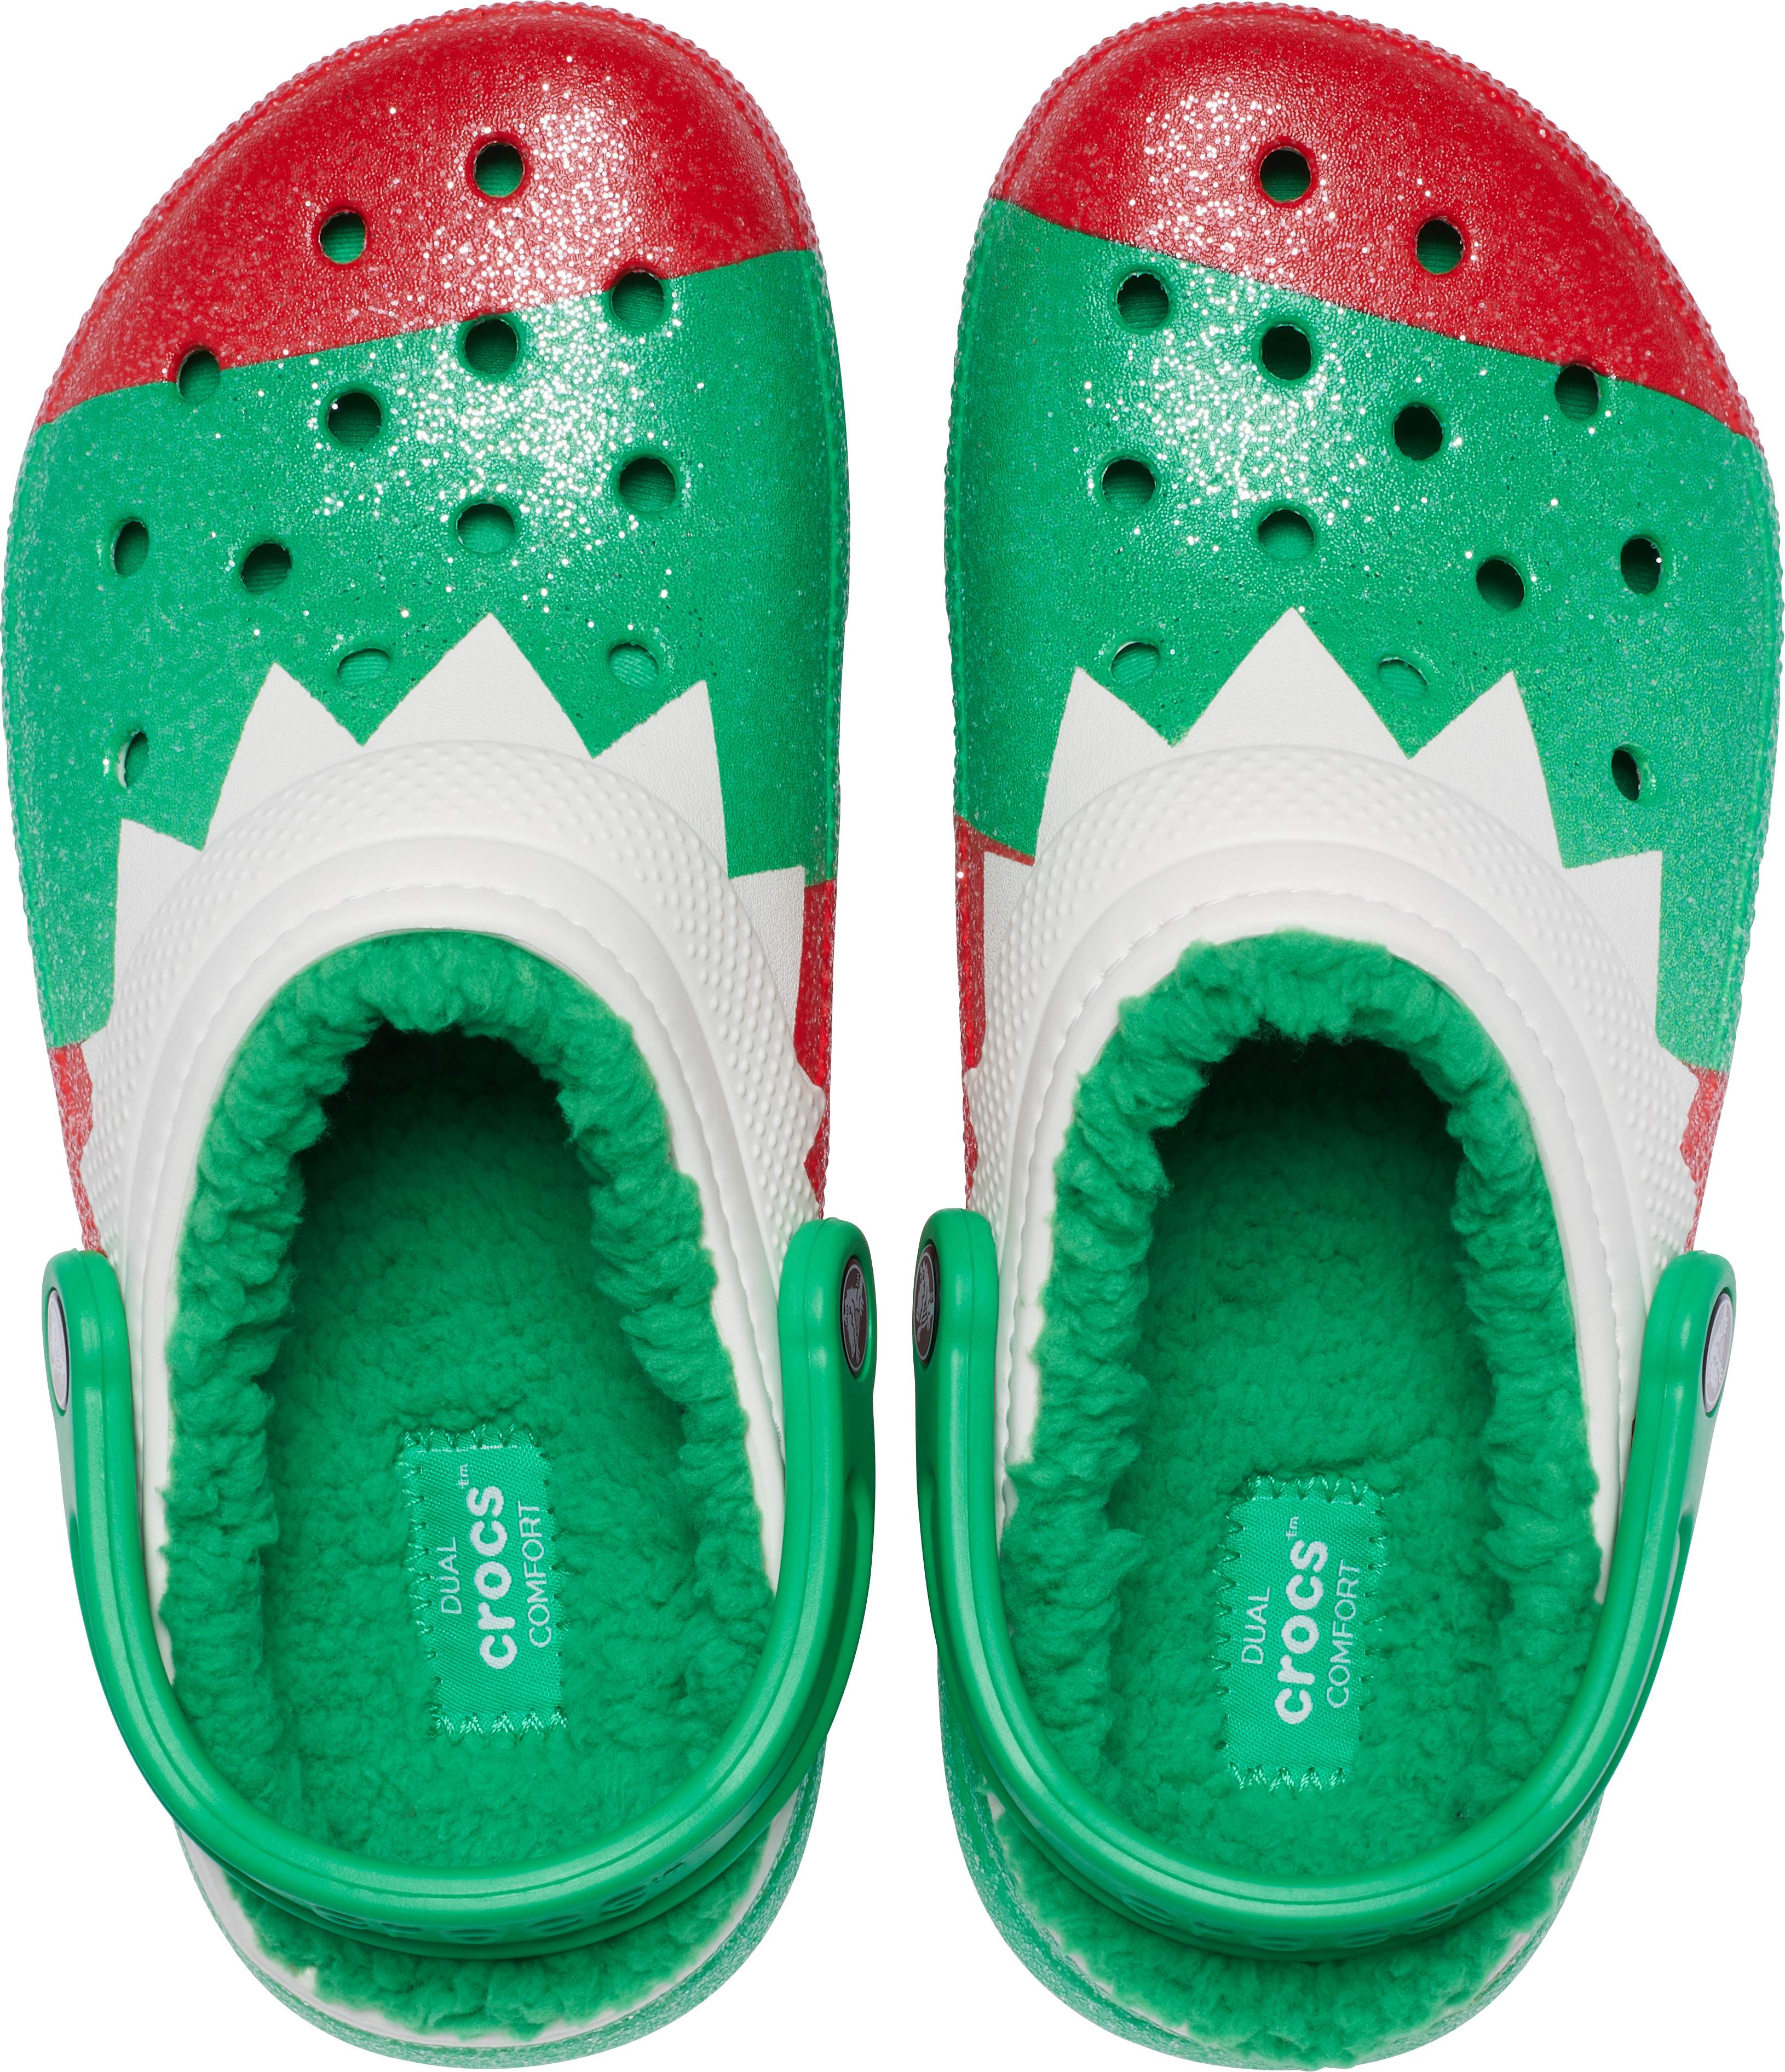 teal lined crocs